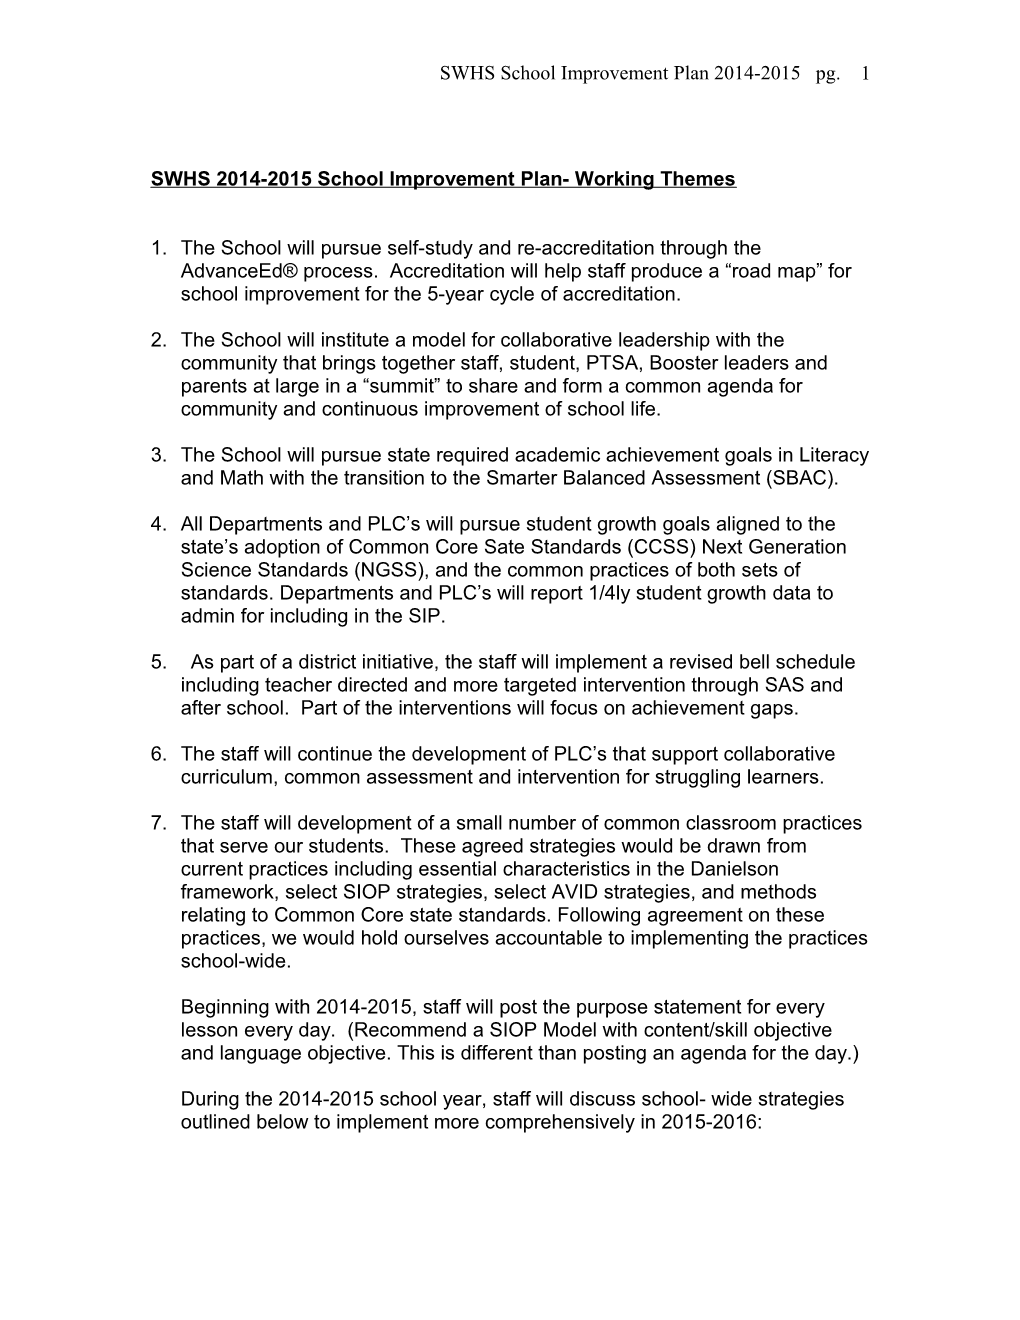 SWHS 2014-2015 School Improvement Plan- Working Themes